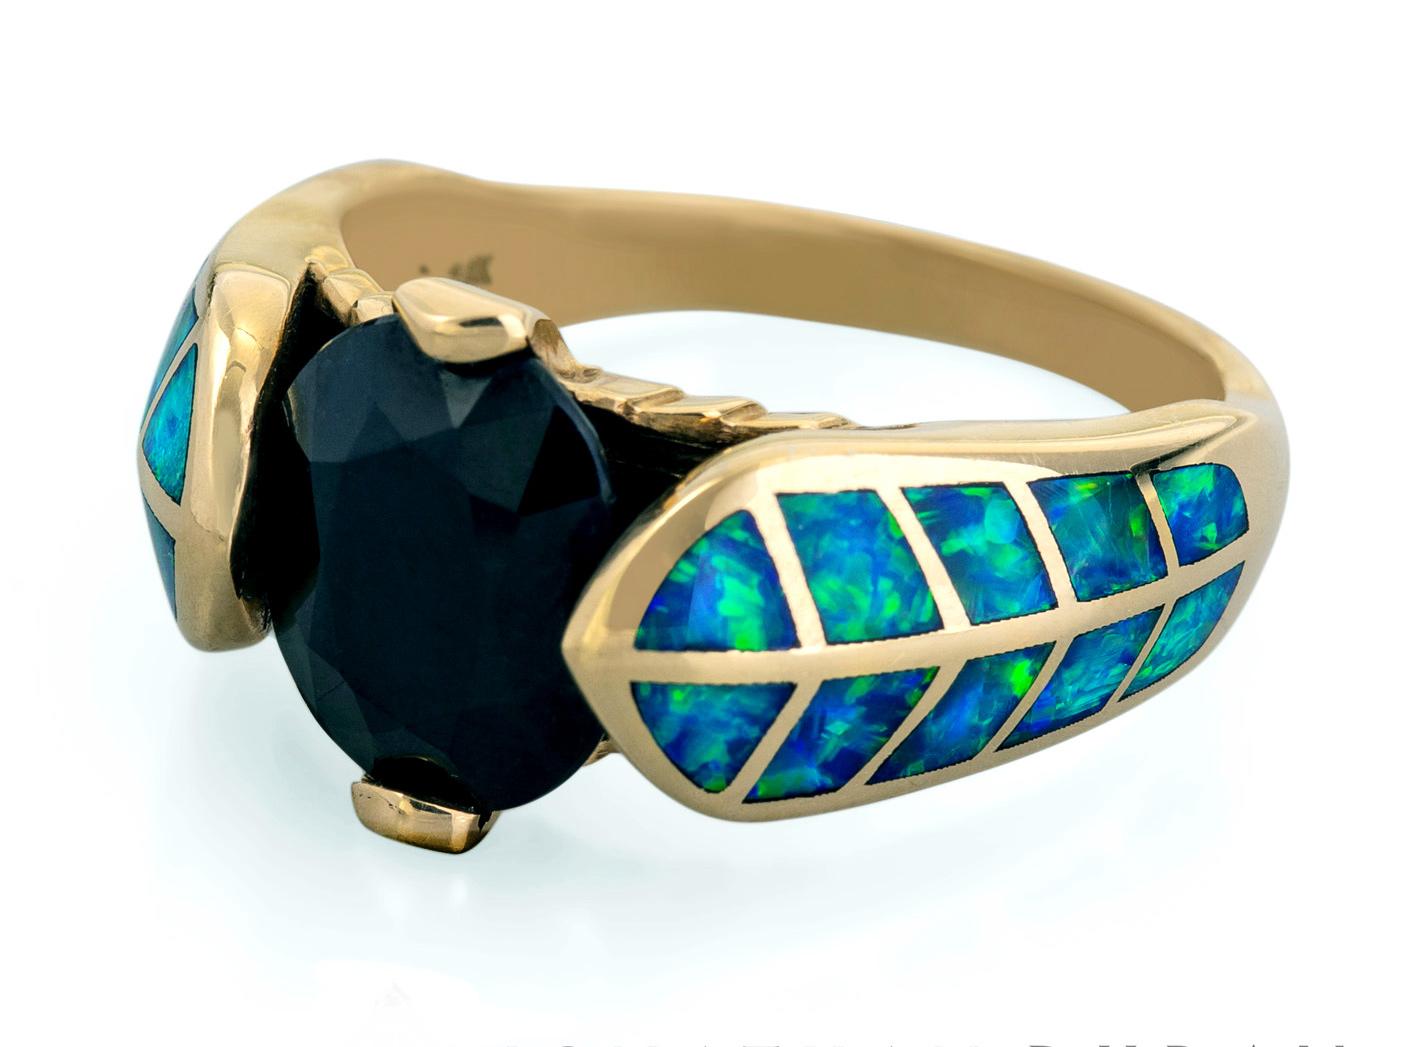 14 karat gold precious Australian opal inlay ring designed by International award-winning jewelry designer, Jonathan Duran, with the 